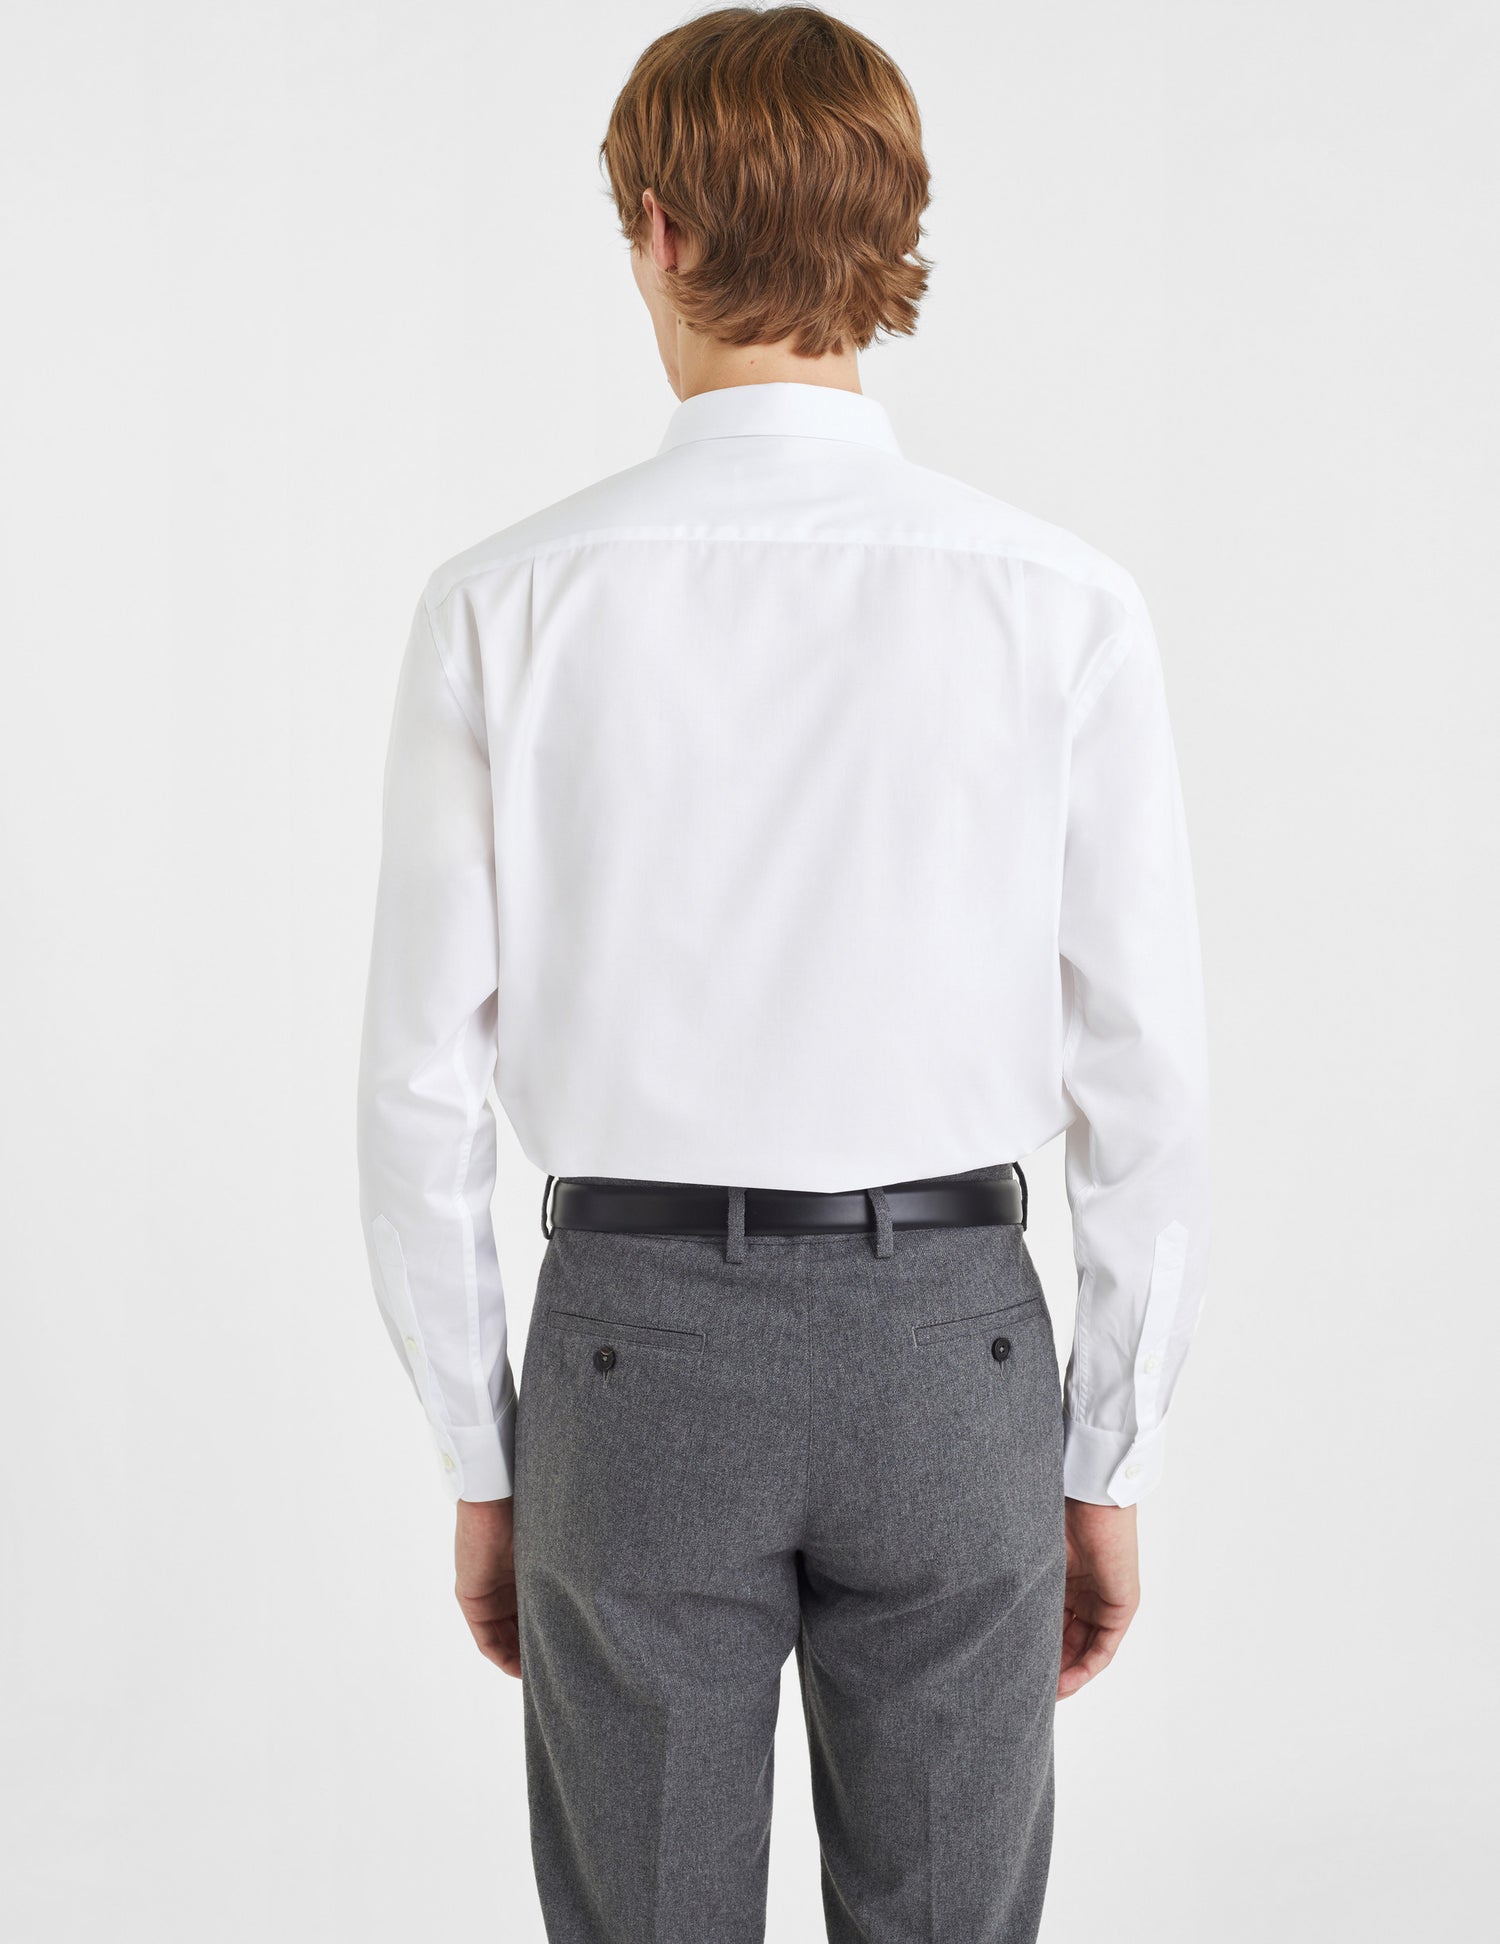 Classic white shirt - Twill - Figaret Collar#3